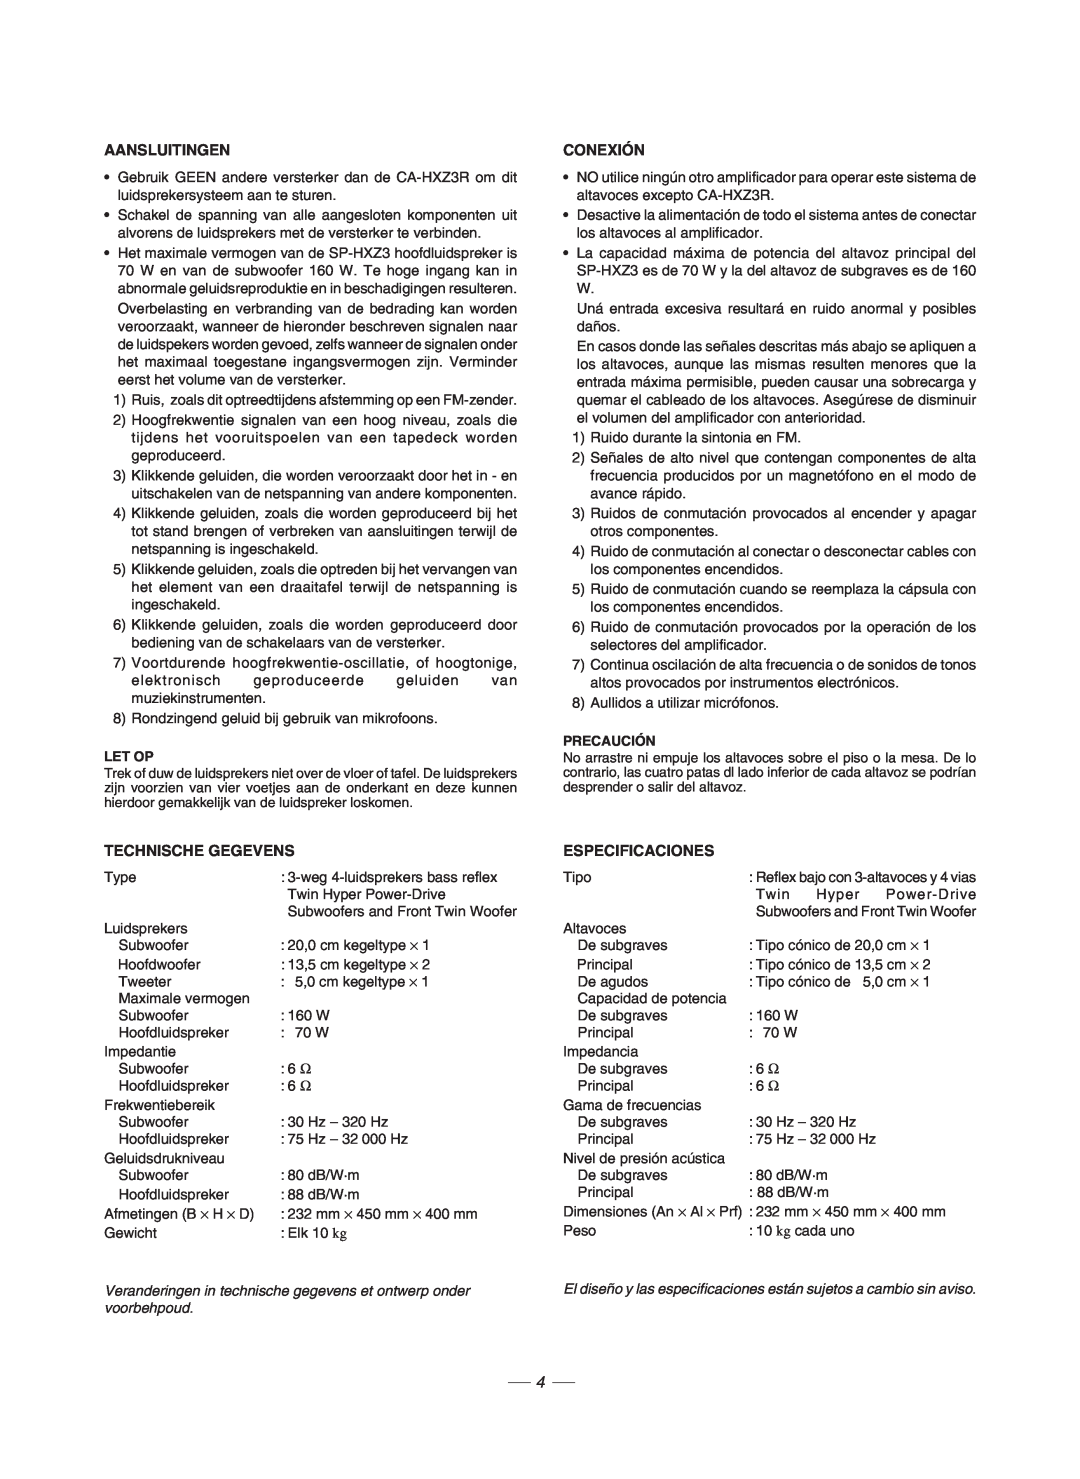 JVC CA-HXZ3R, GVT0086-008A manual Aansluitingen, Conexión, Technische Gegevens, Especificaciones 